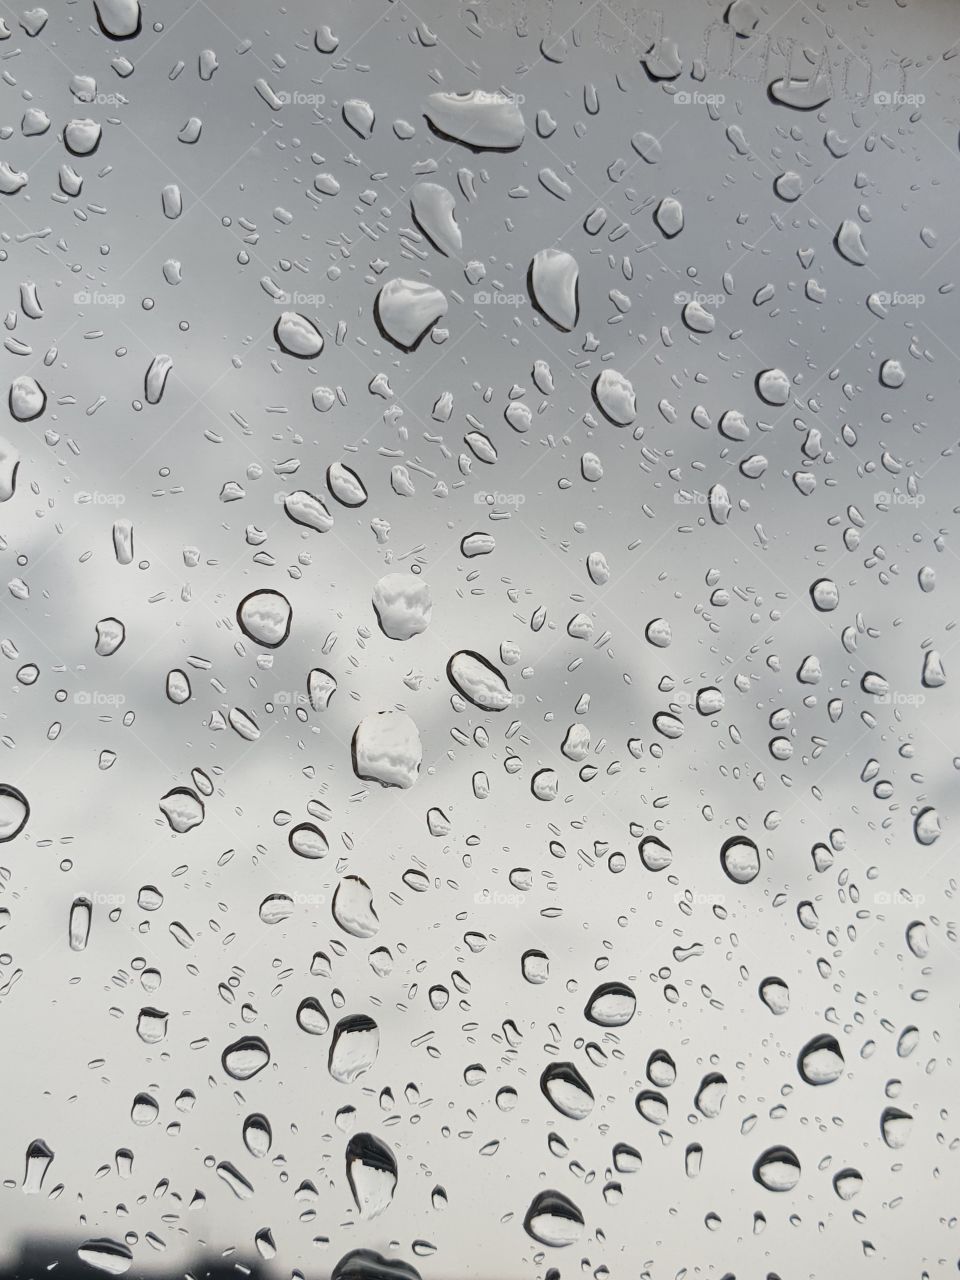 raindrops on my window pane.